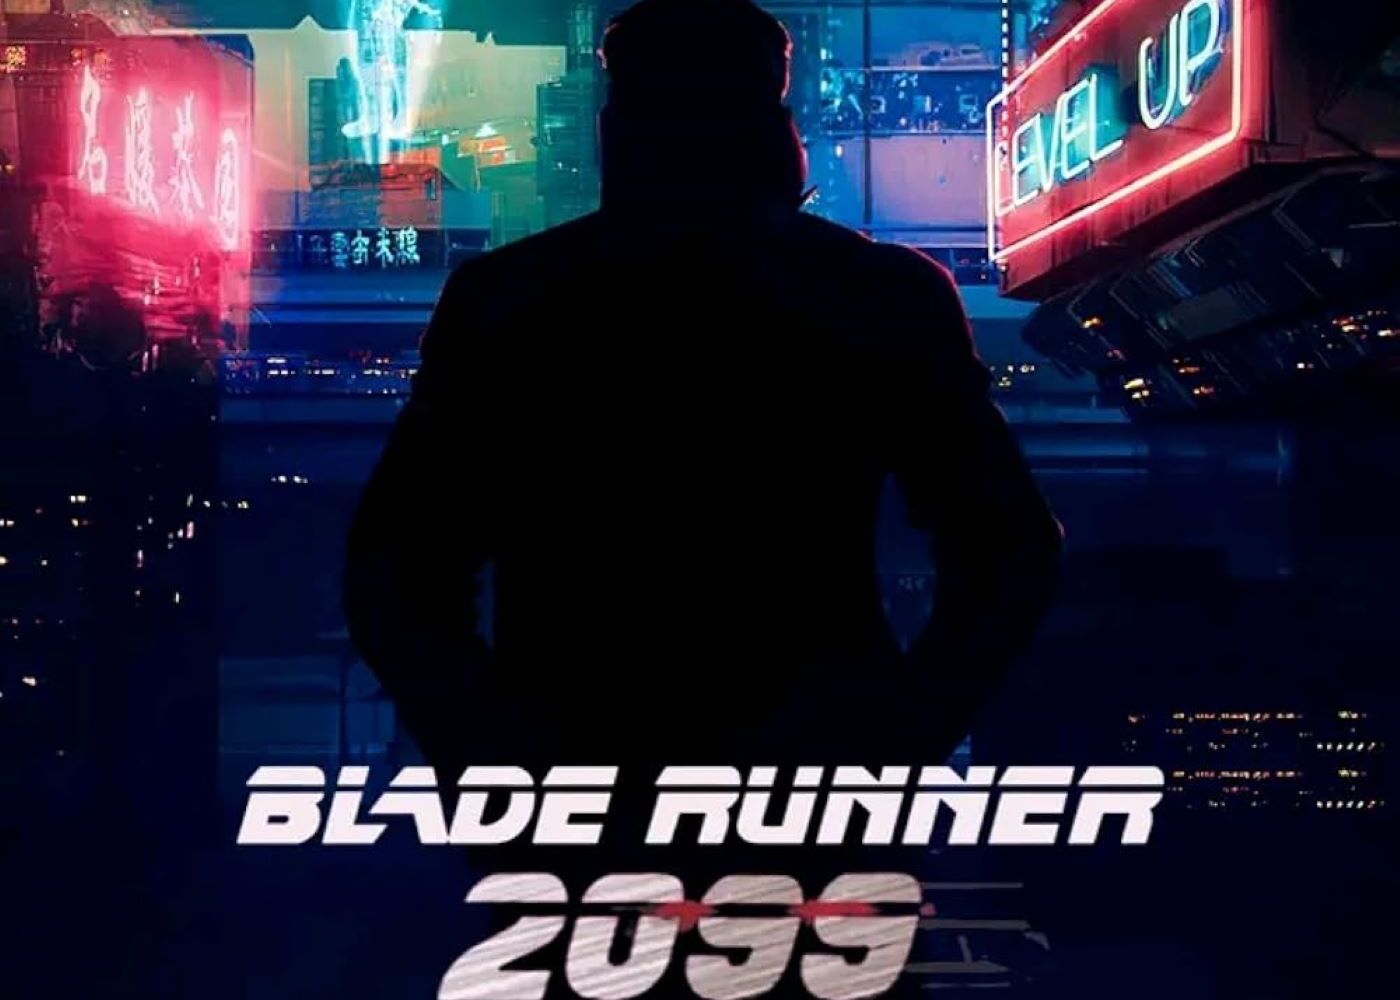 blade runner 2099 shooting